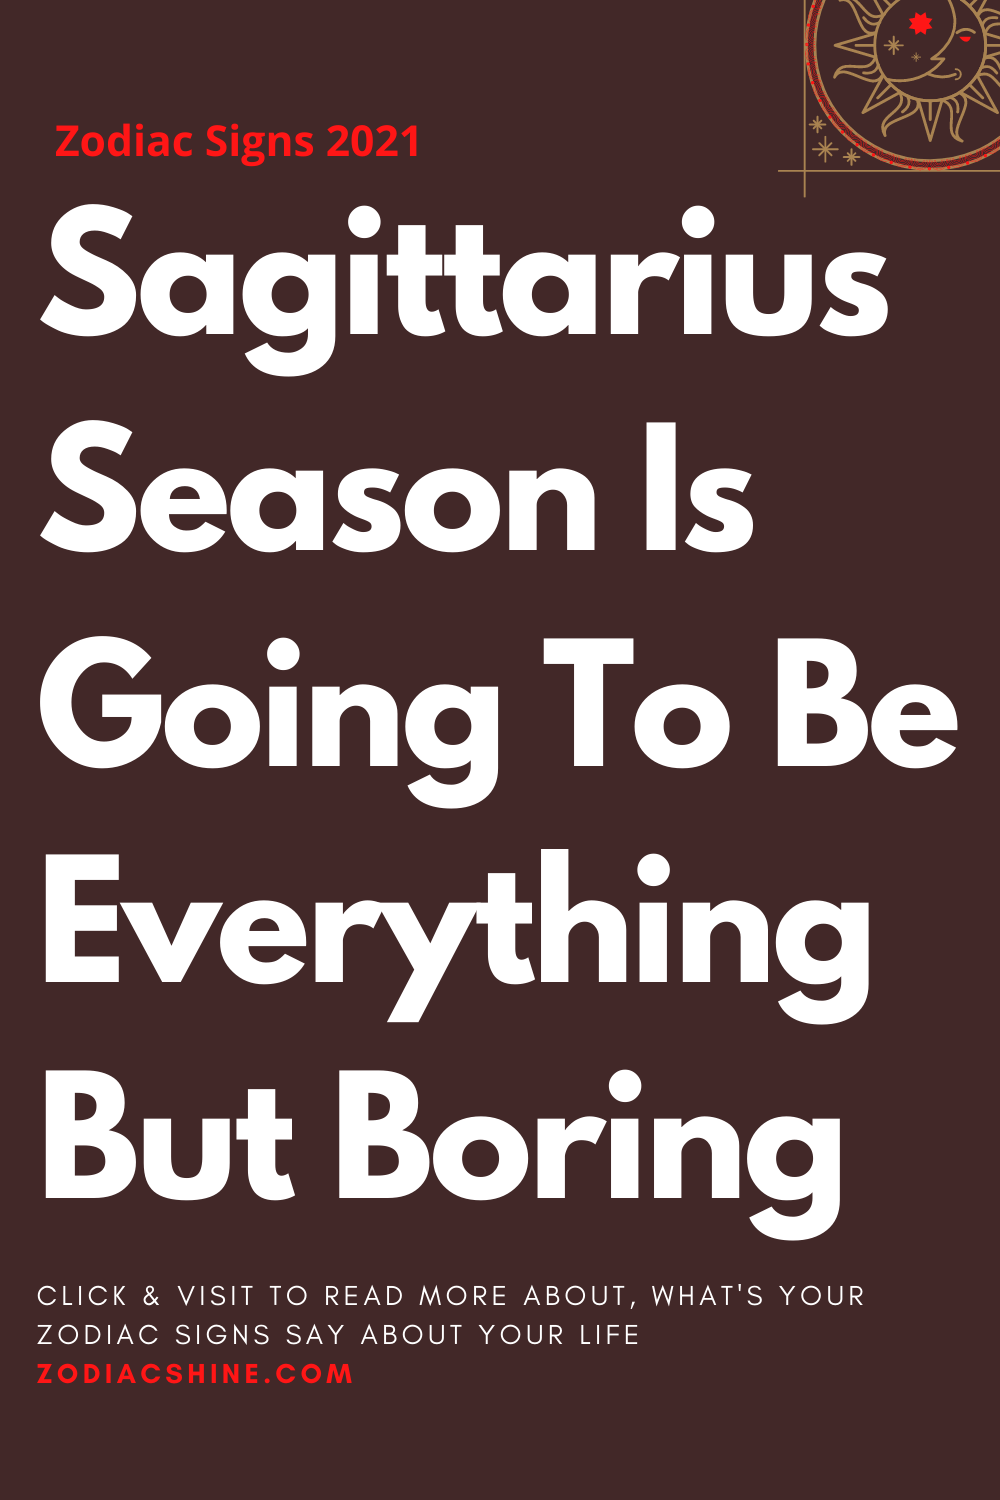 Sagittarius Season Is Going To Be Everything But Boring